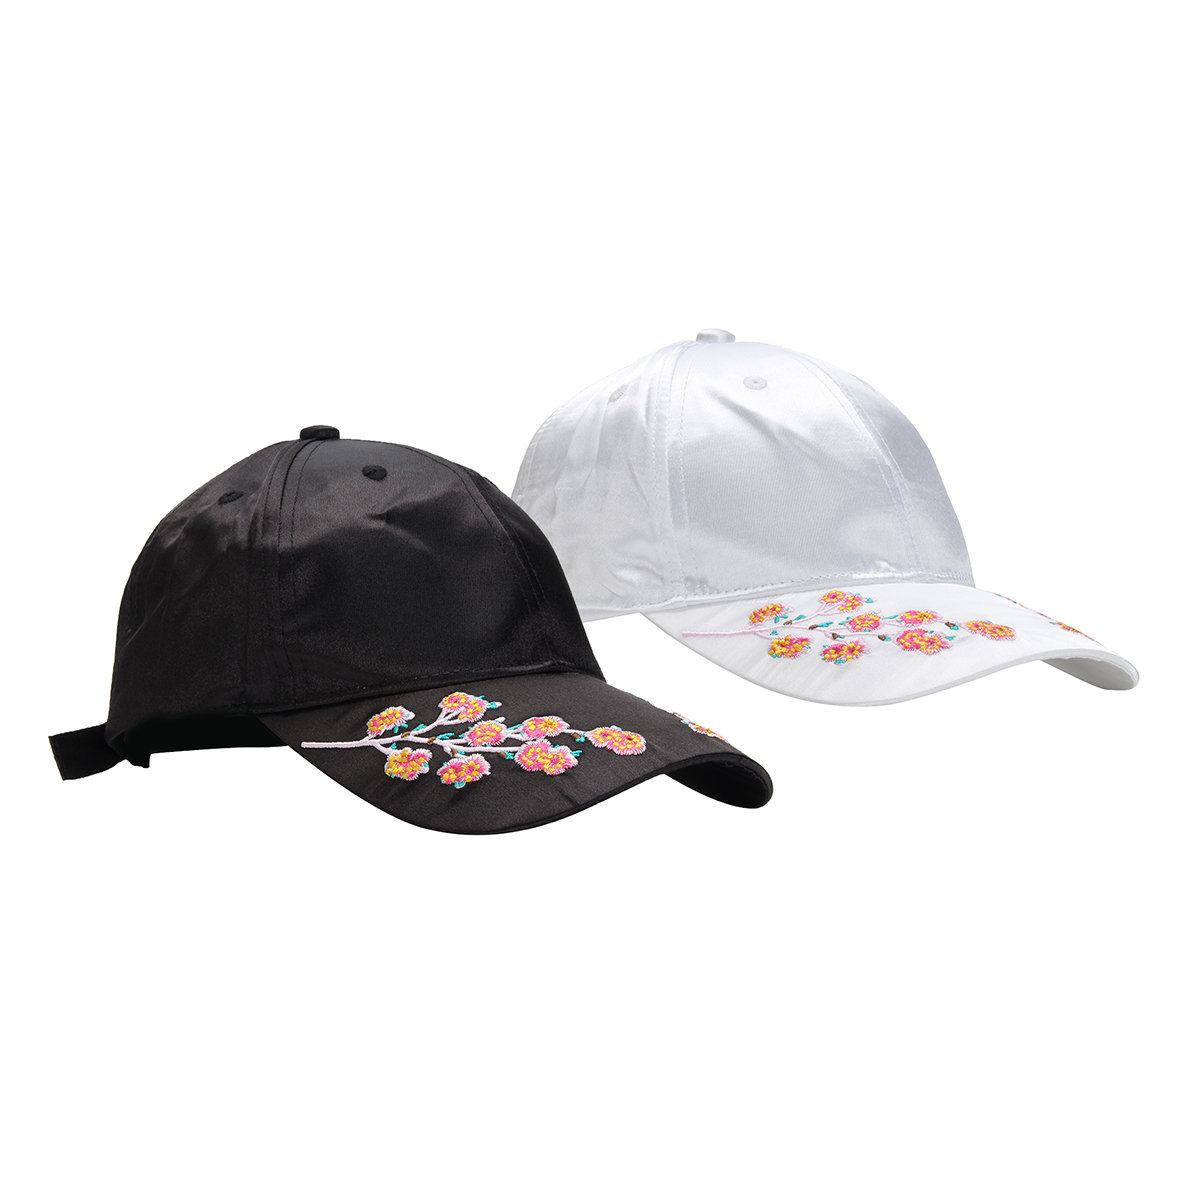 

Women Plum Embroidery Cotton Baseball Cap Travel Sunscreen Snapback Caps Hip Hop Hat, White black